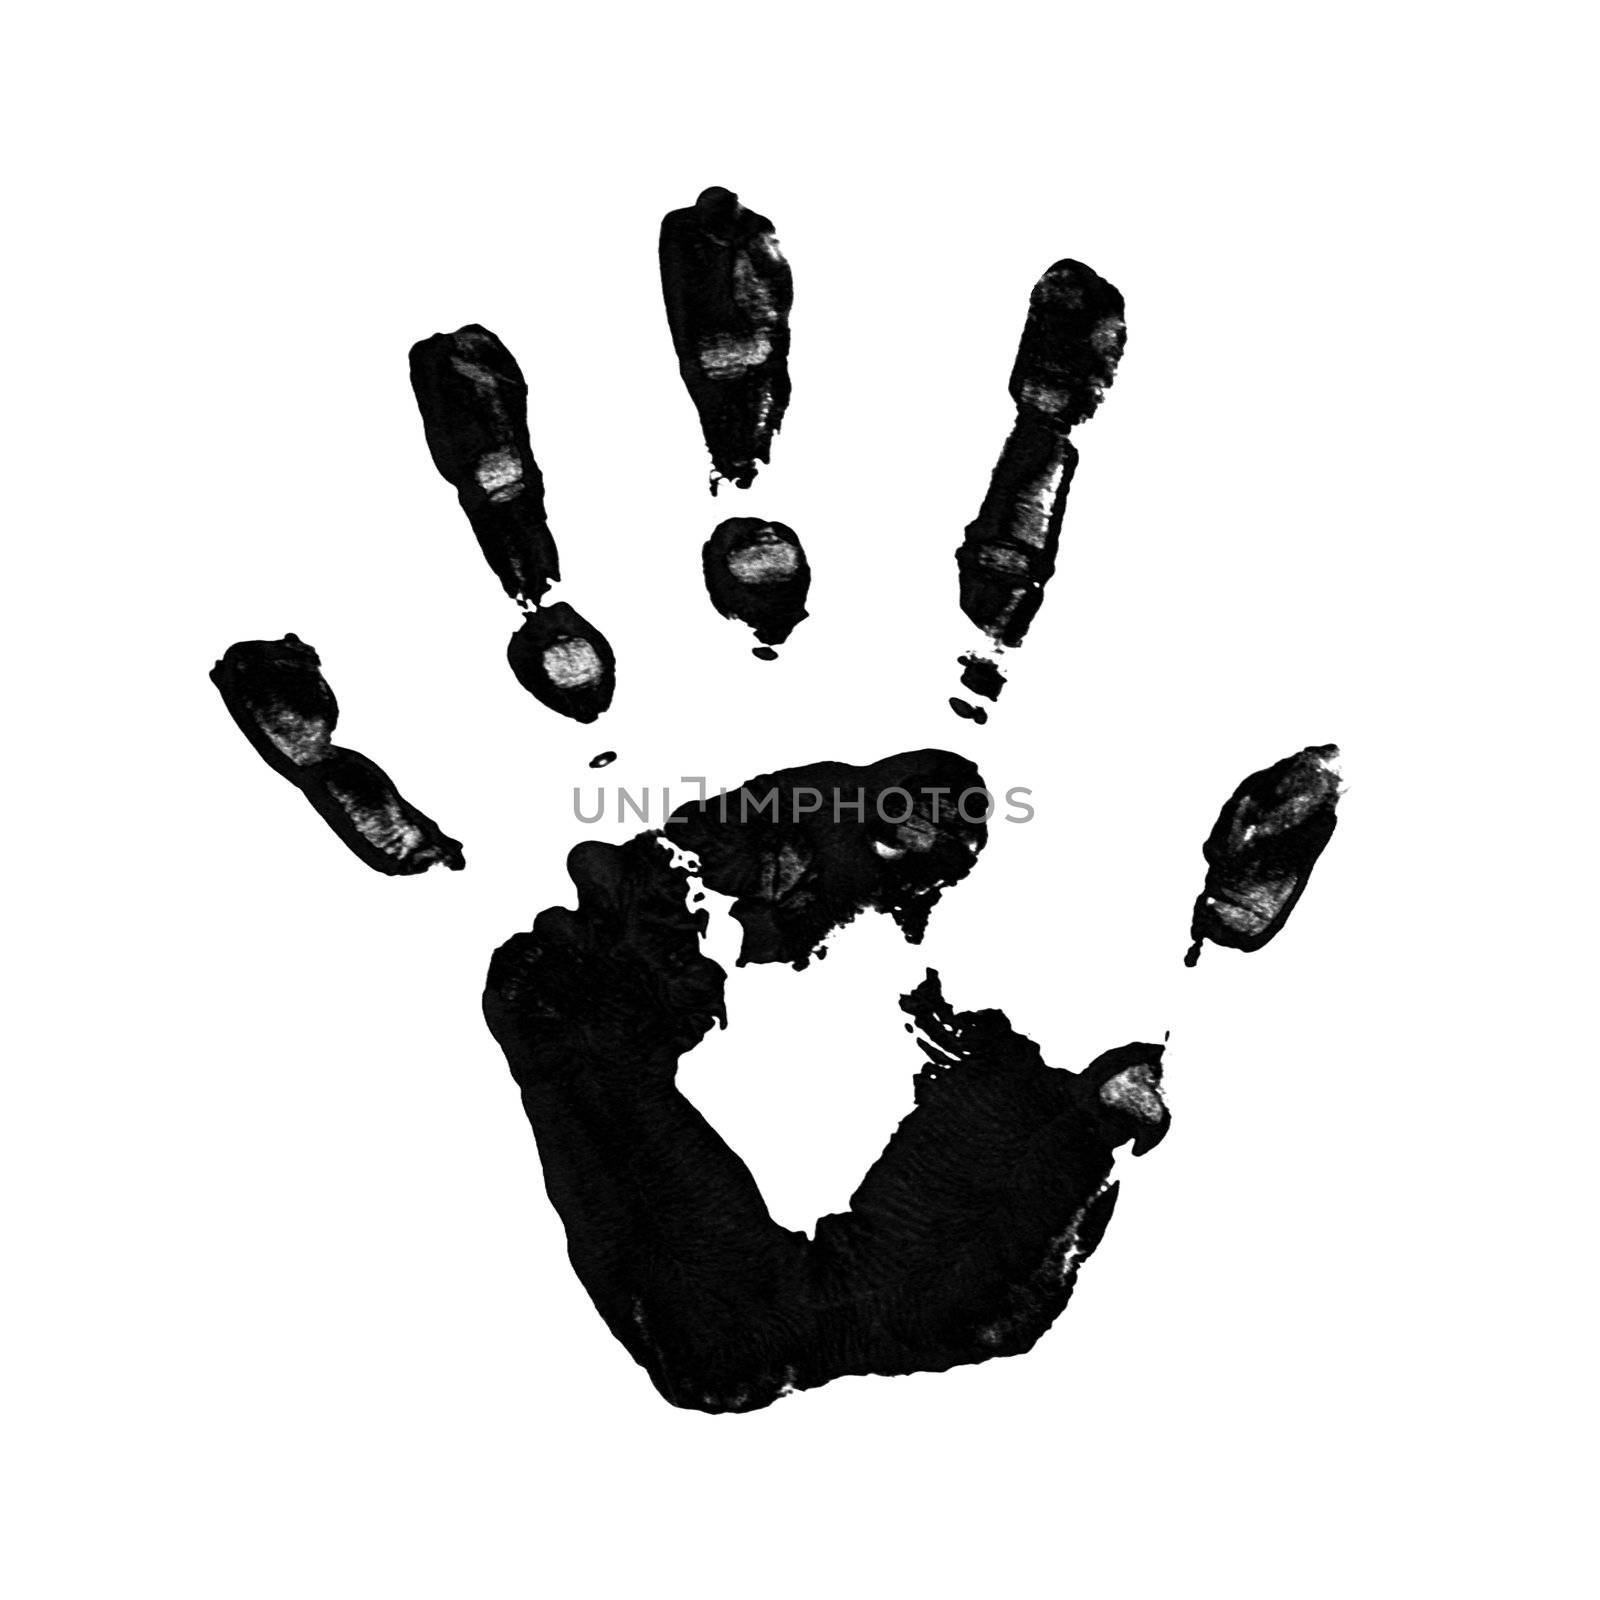 black handprint on white background by photochecker